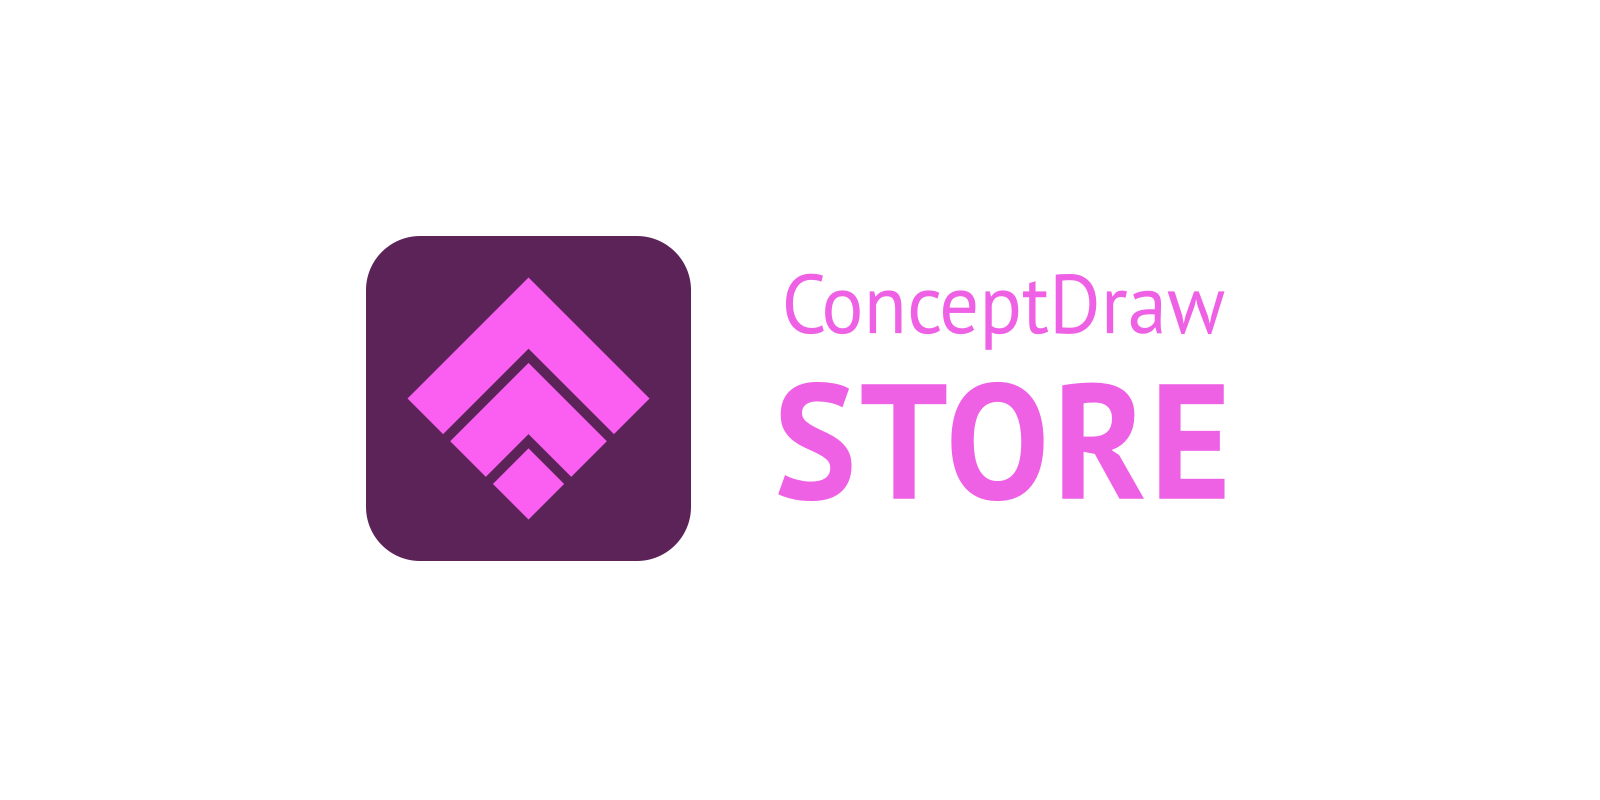 ConceptDraw STORE logo